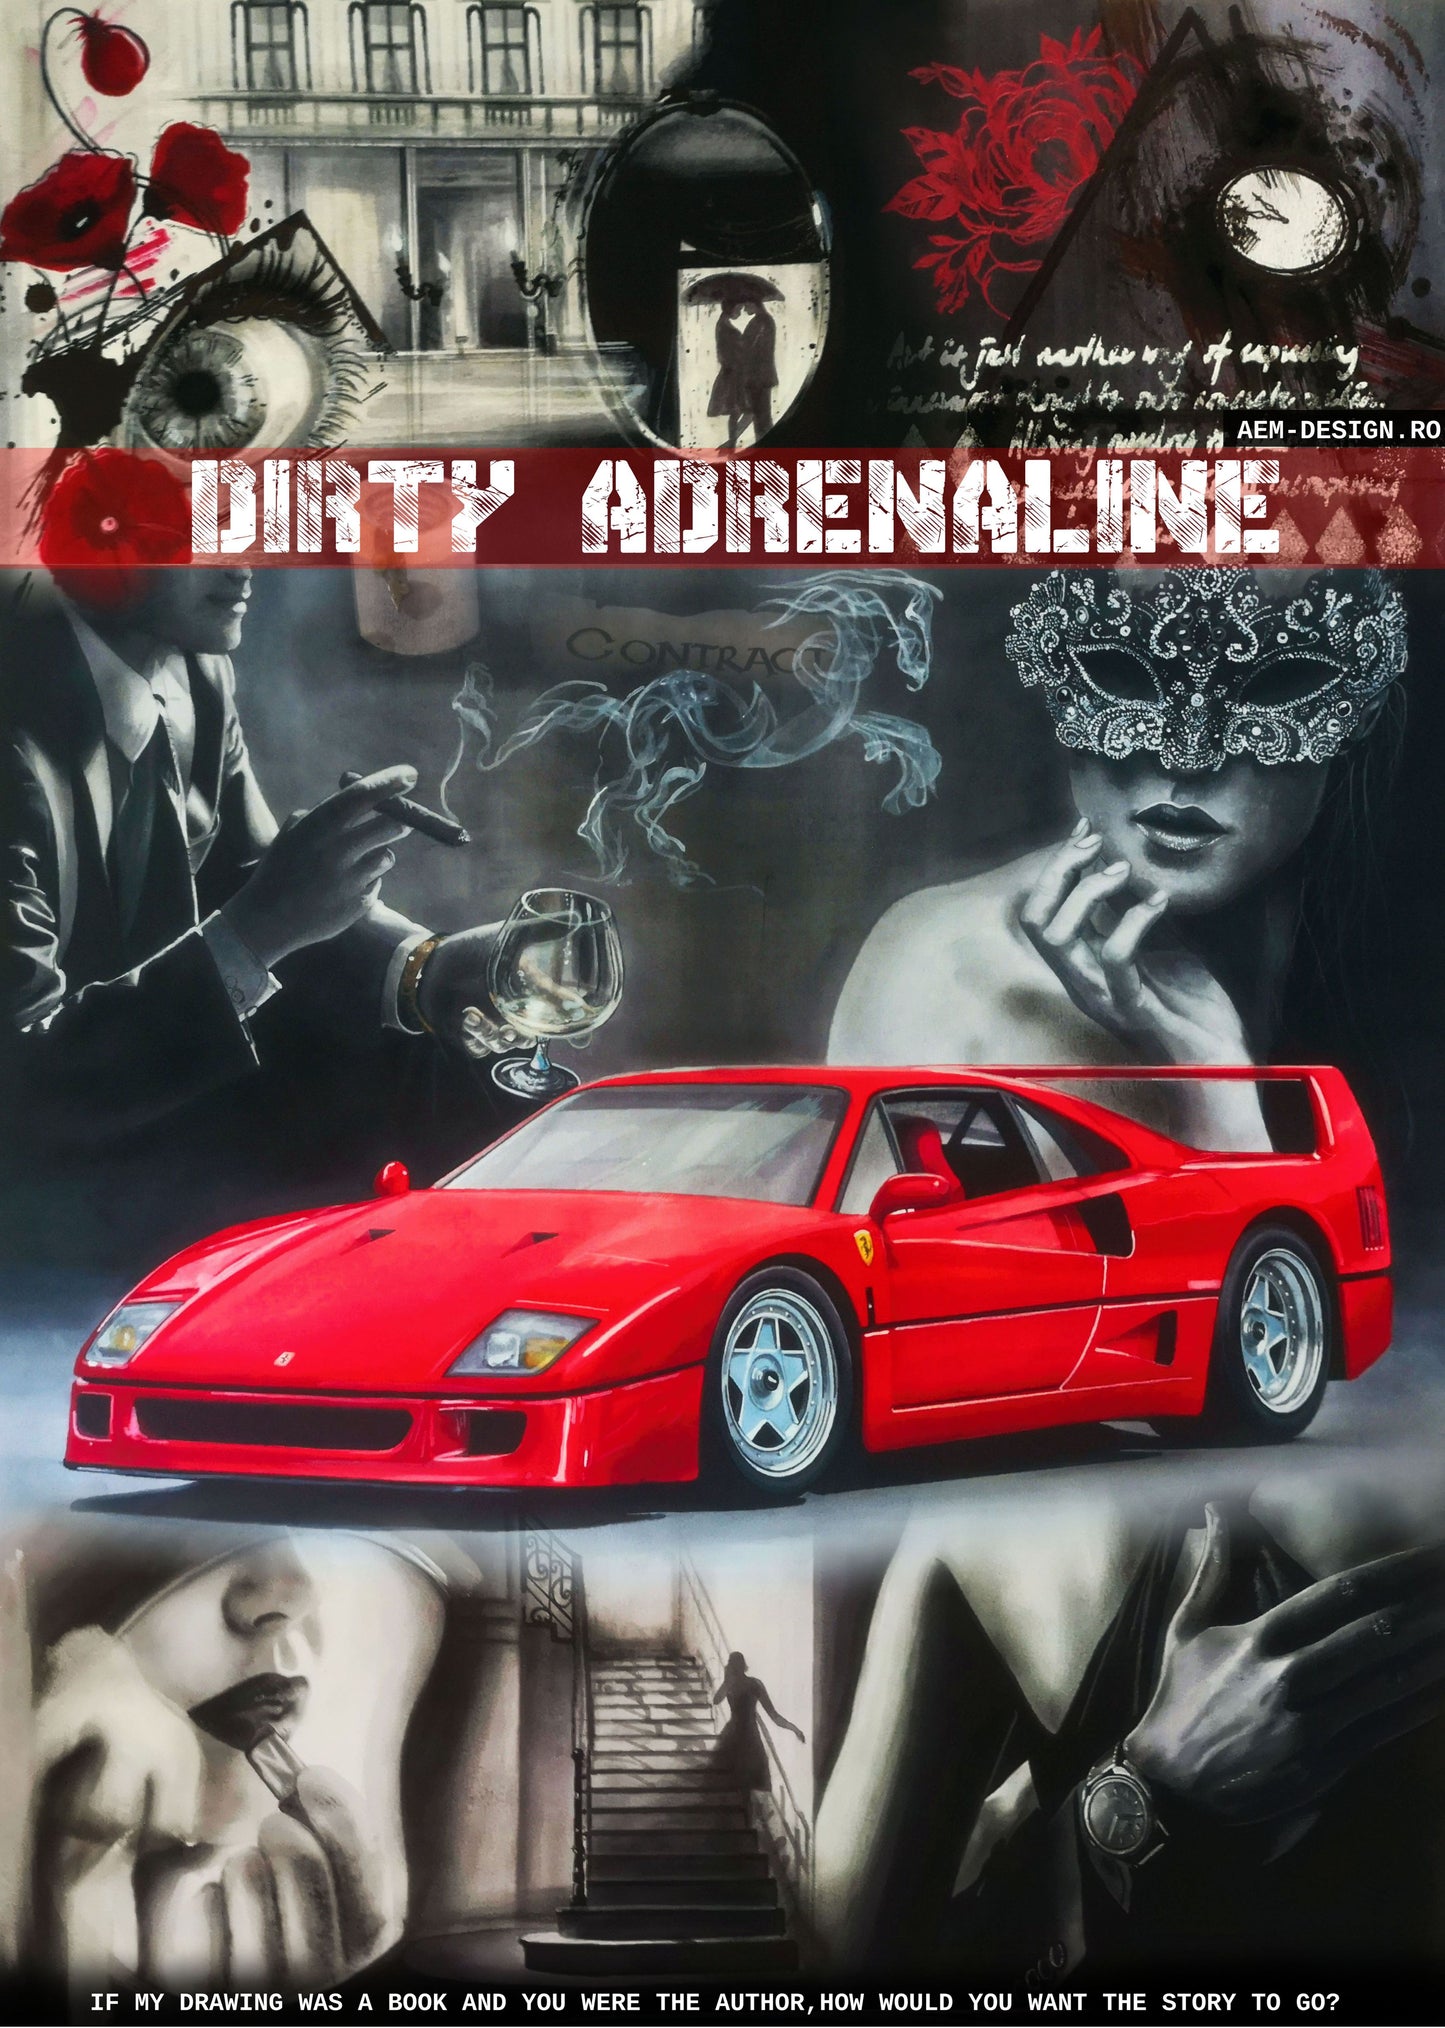 Dirty Adrenaline Automotive Art Poster